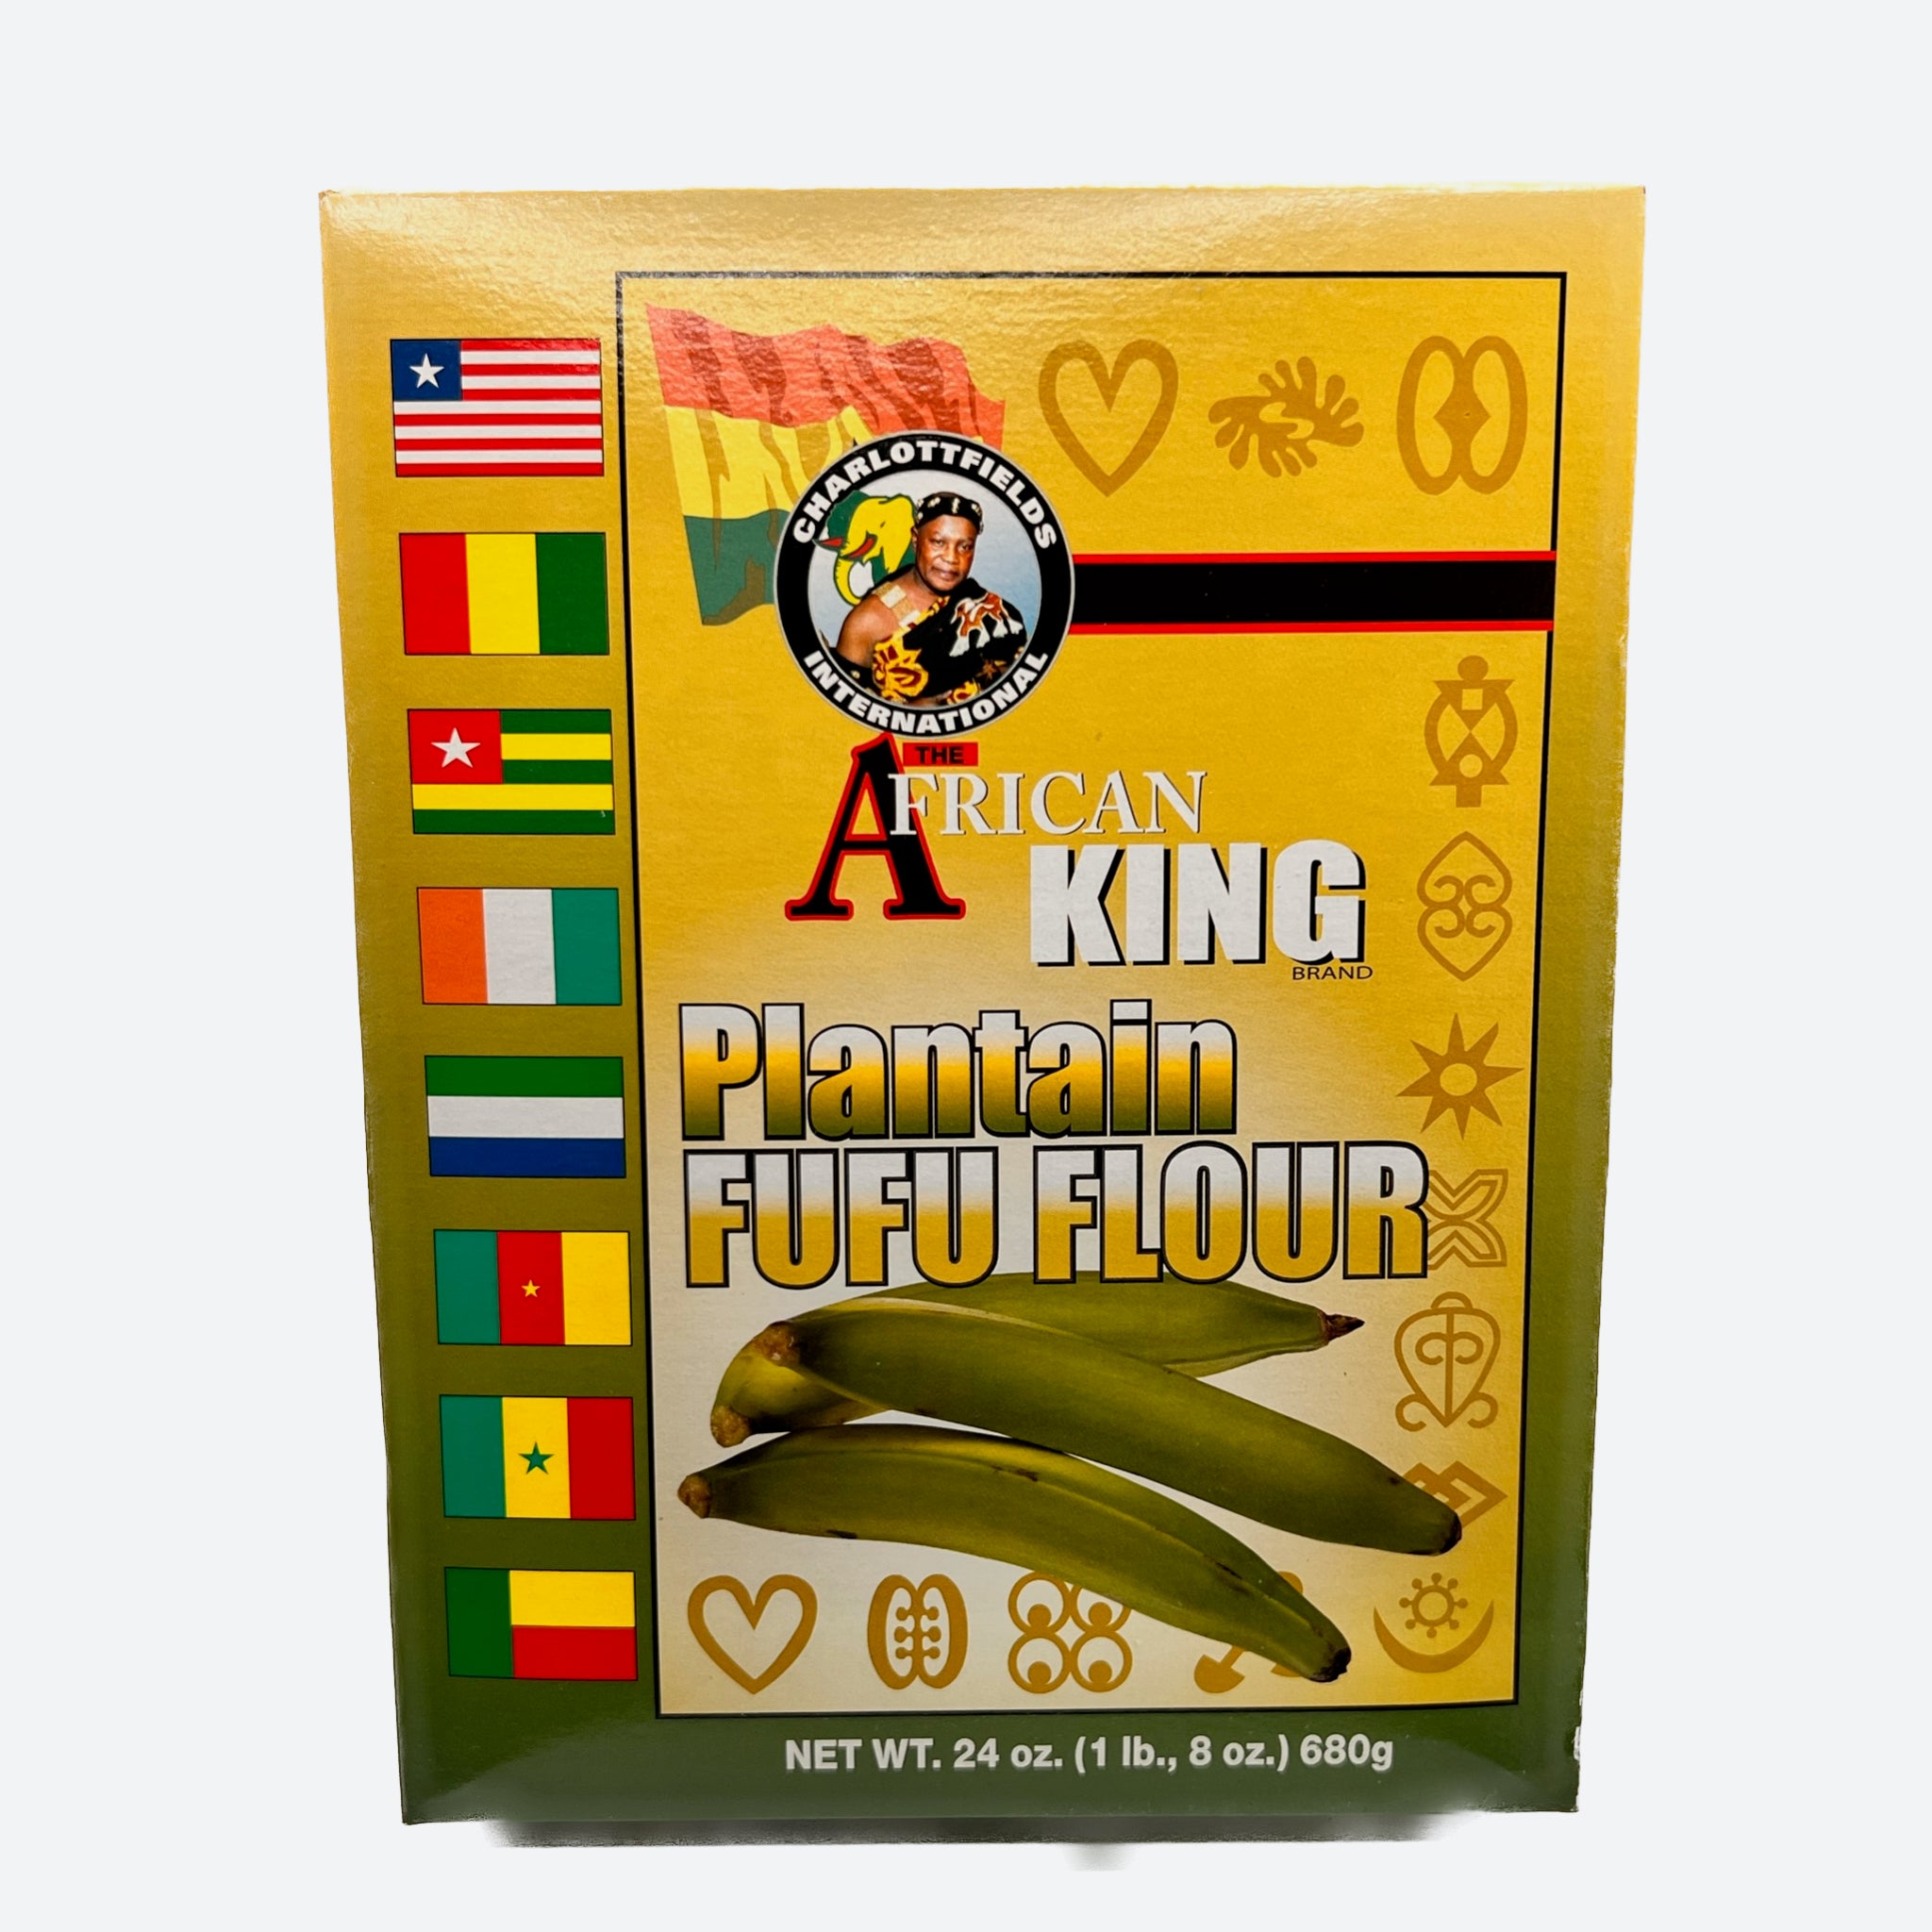 African King Plantain Fufu Flour - 24oz